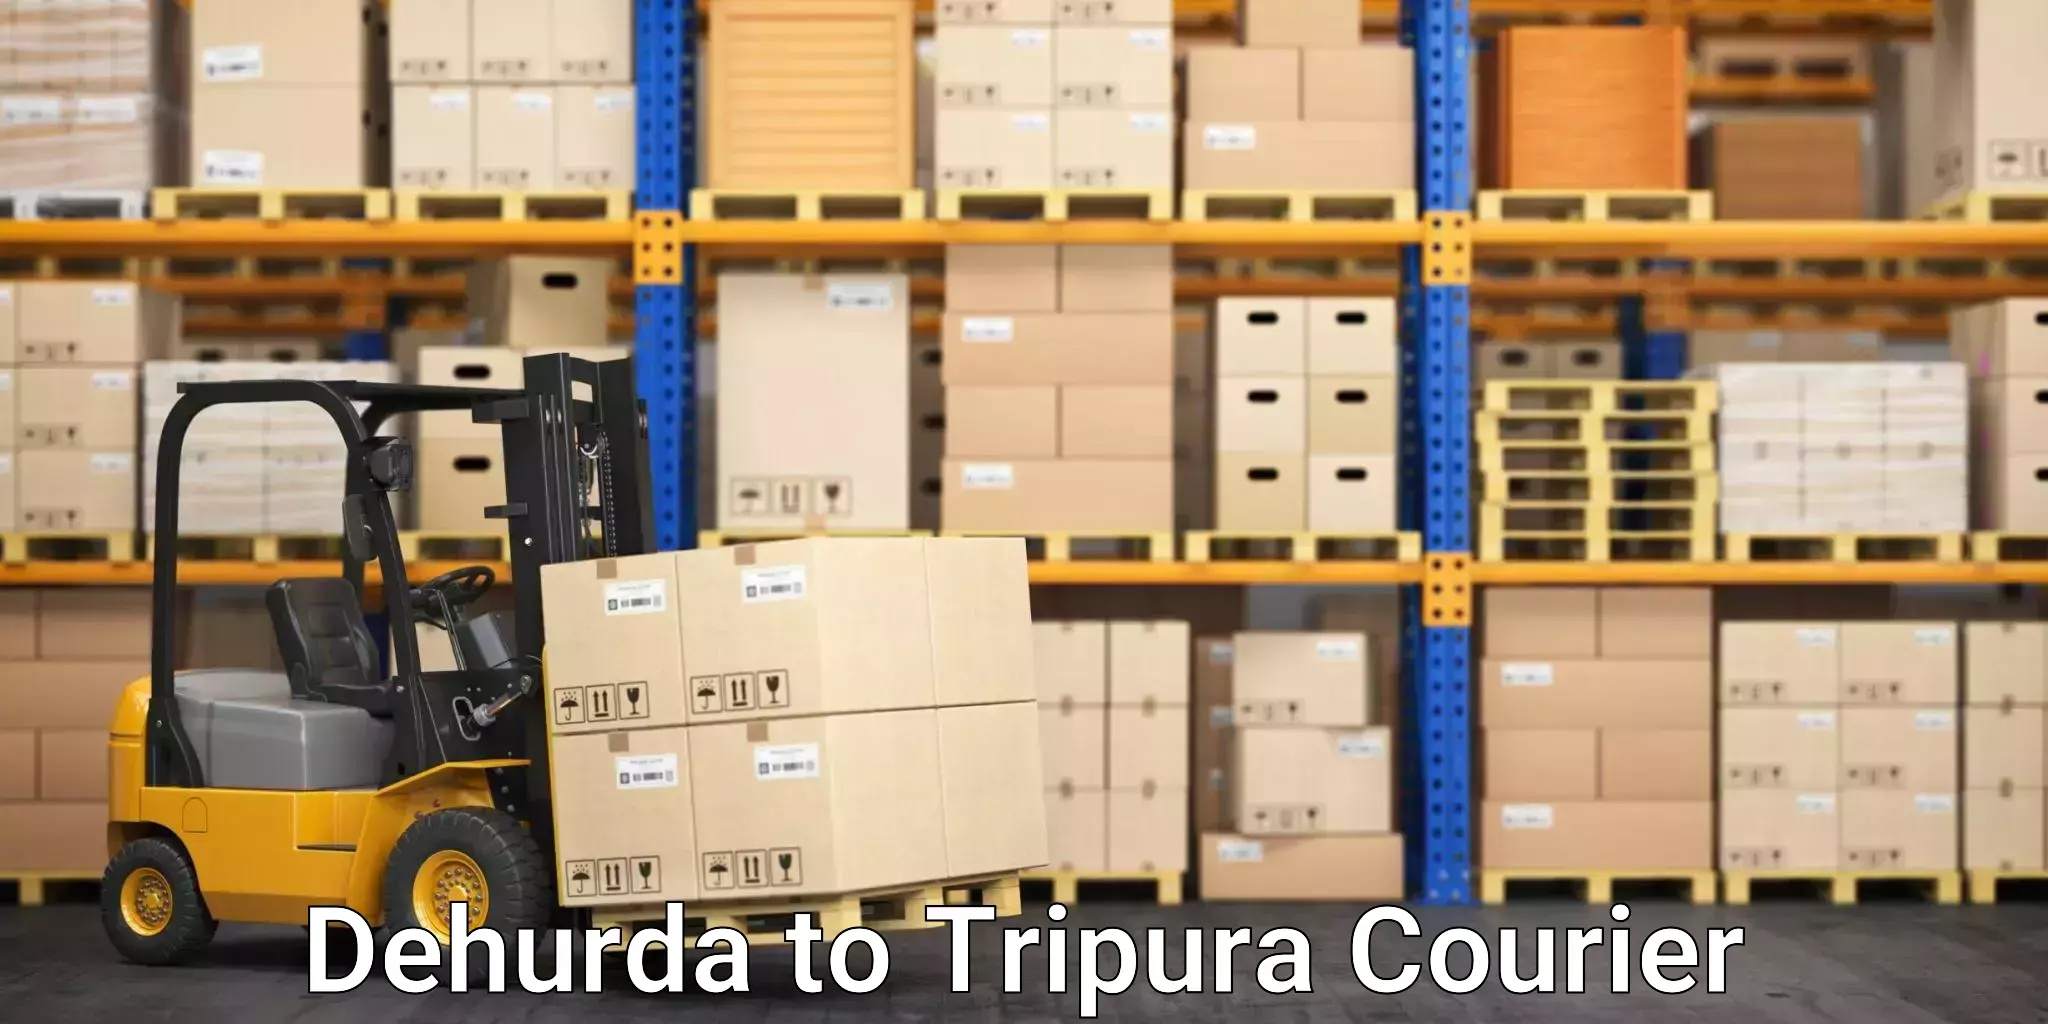 24-hour courier service Dehurda to West Tripura